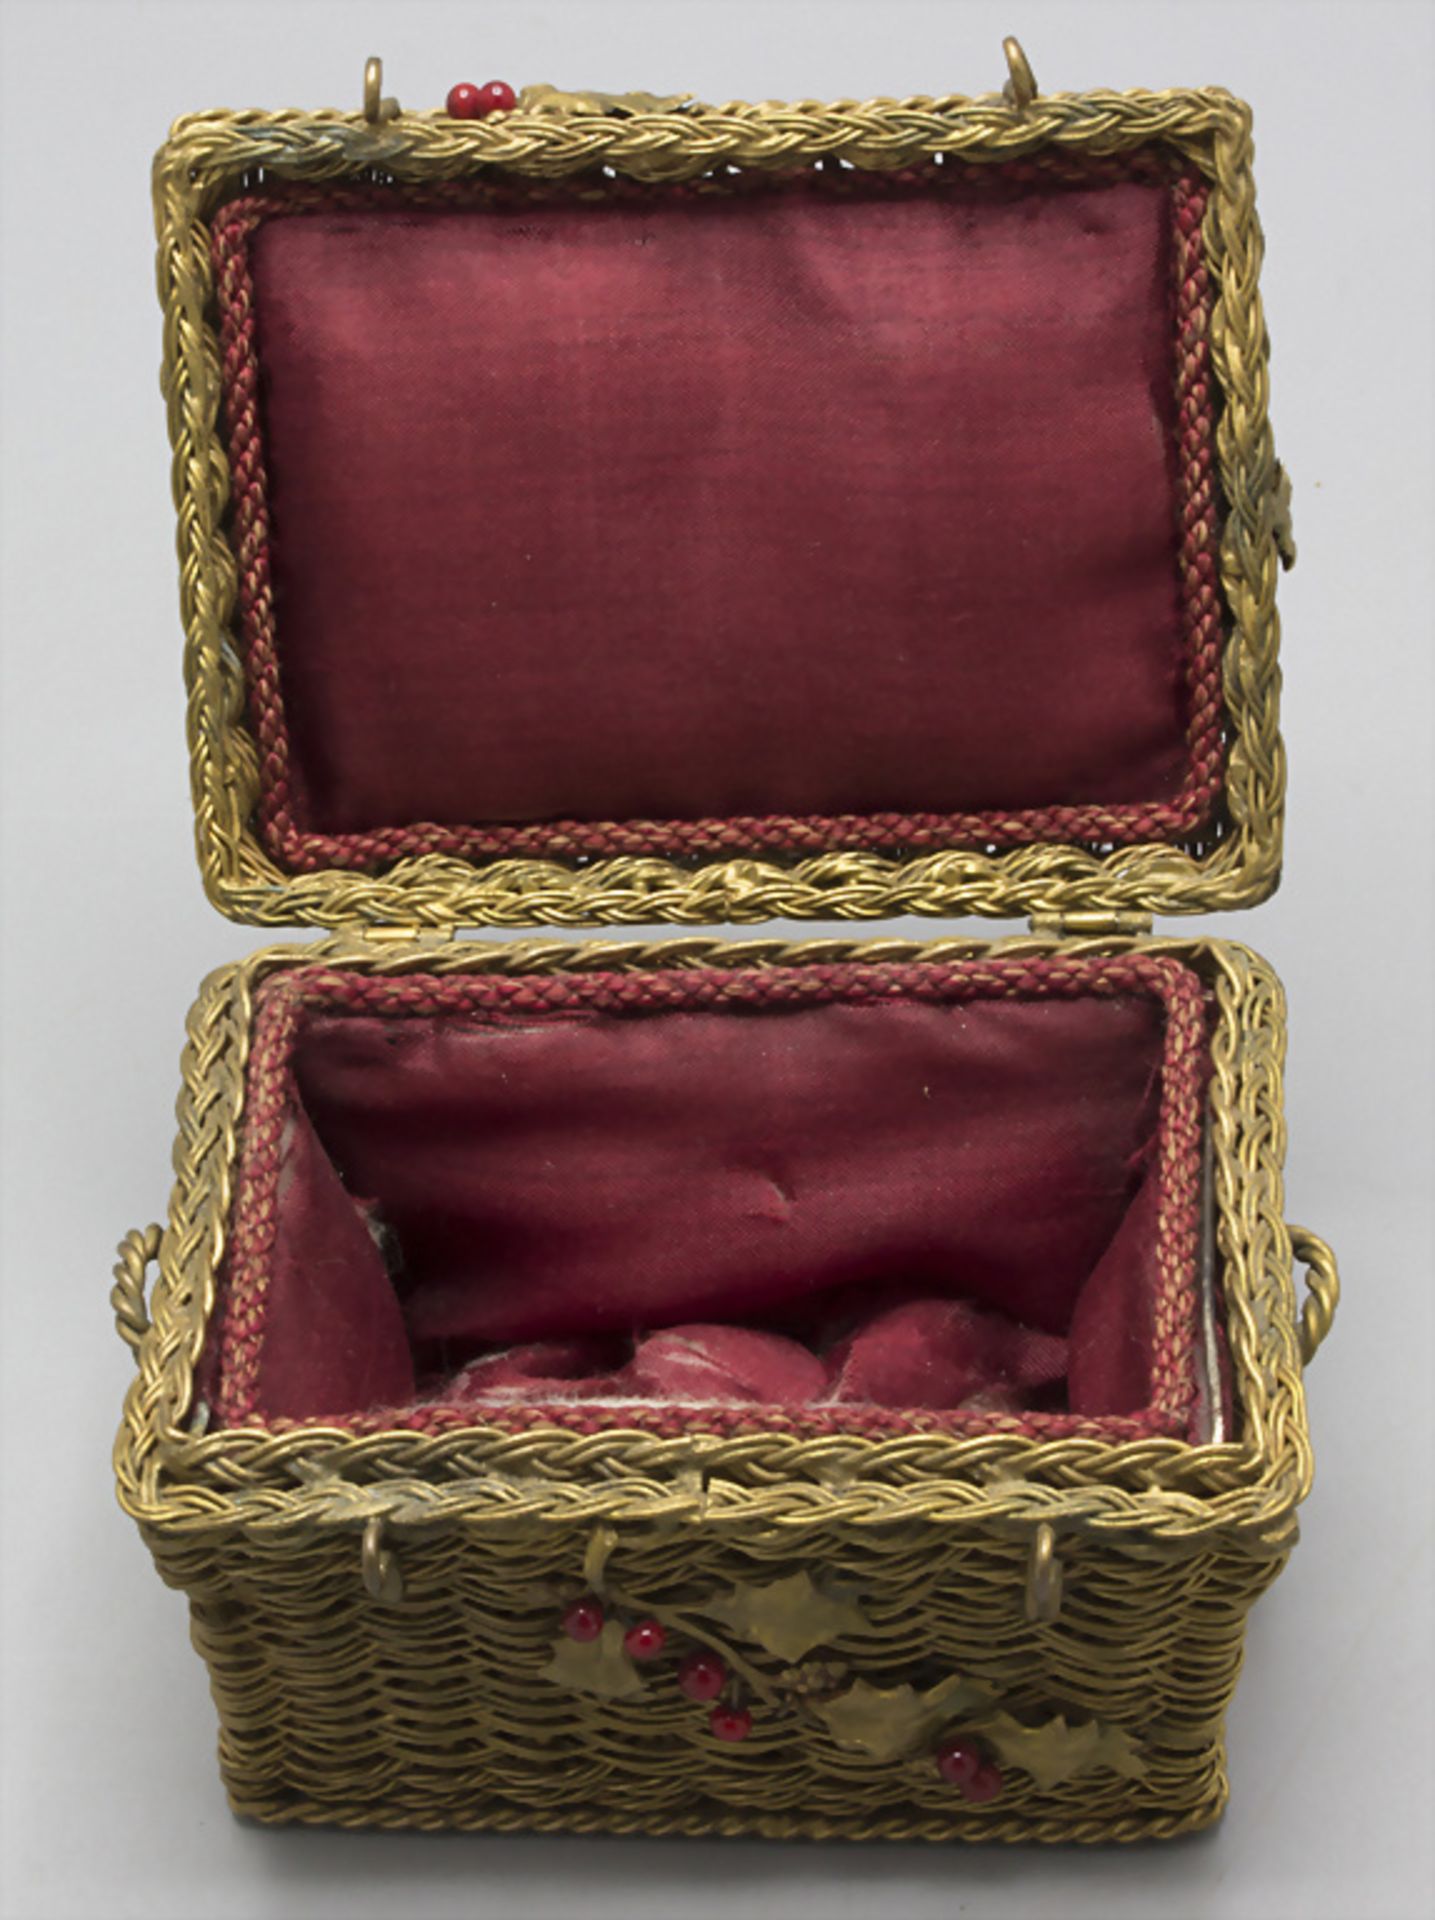 Miniatur Weidentruhe als Schmuckdose / A miniature bronze willow chest with holly branches as ... - Bild 3 aus 4